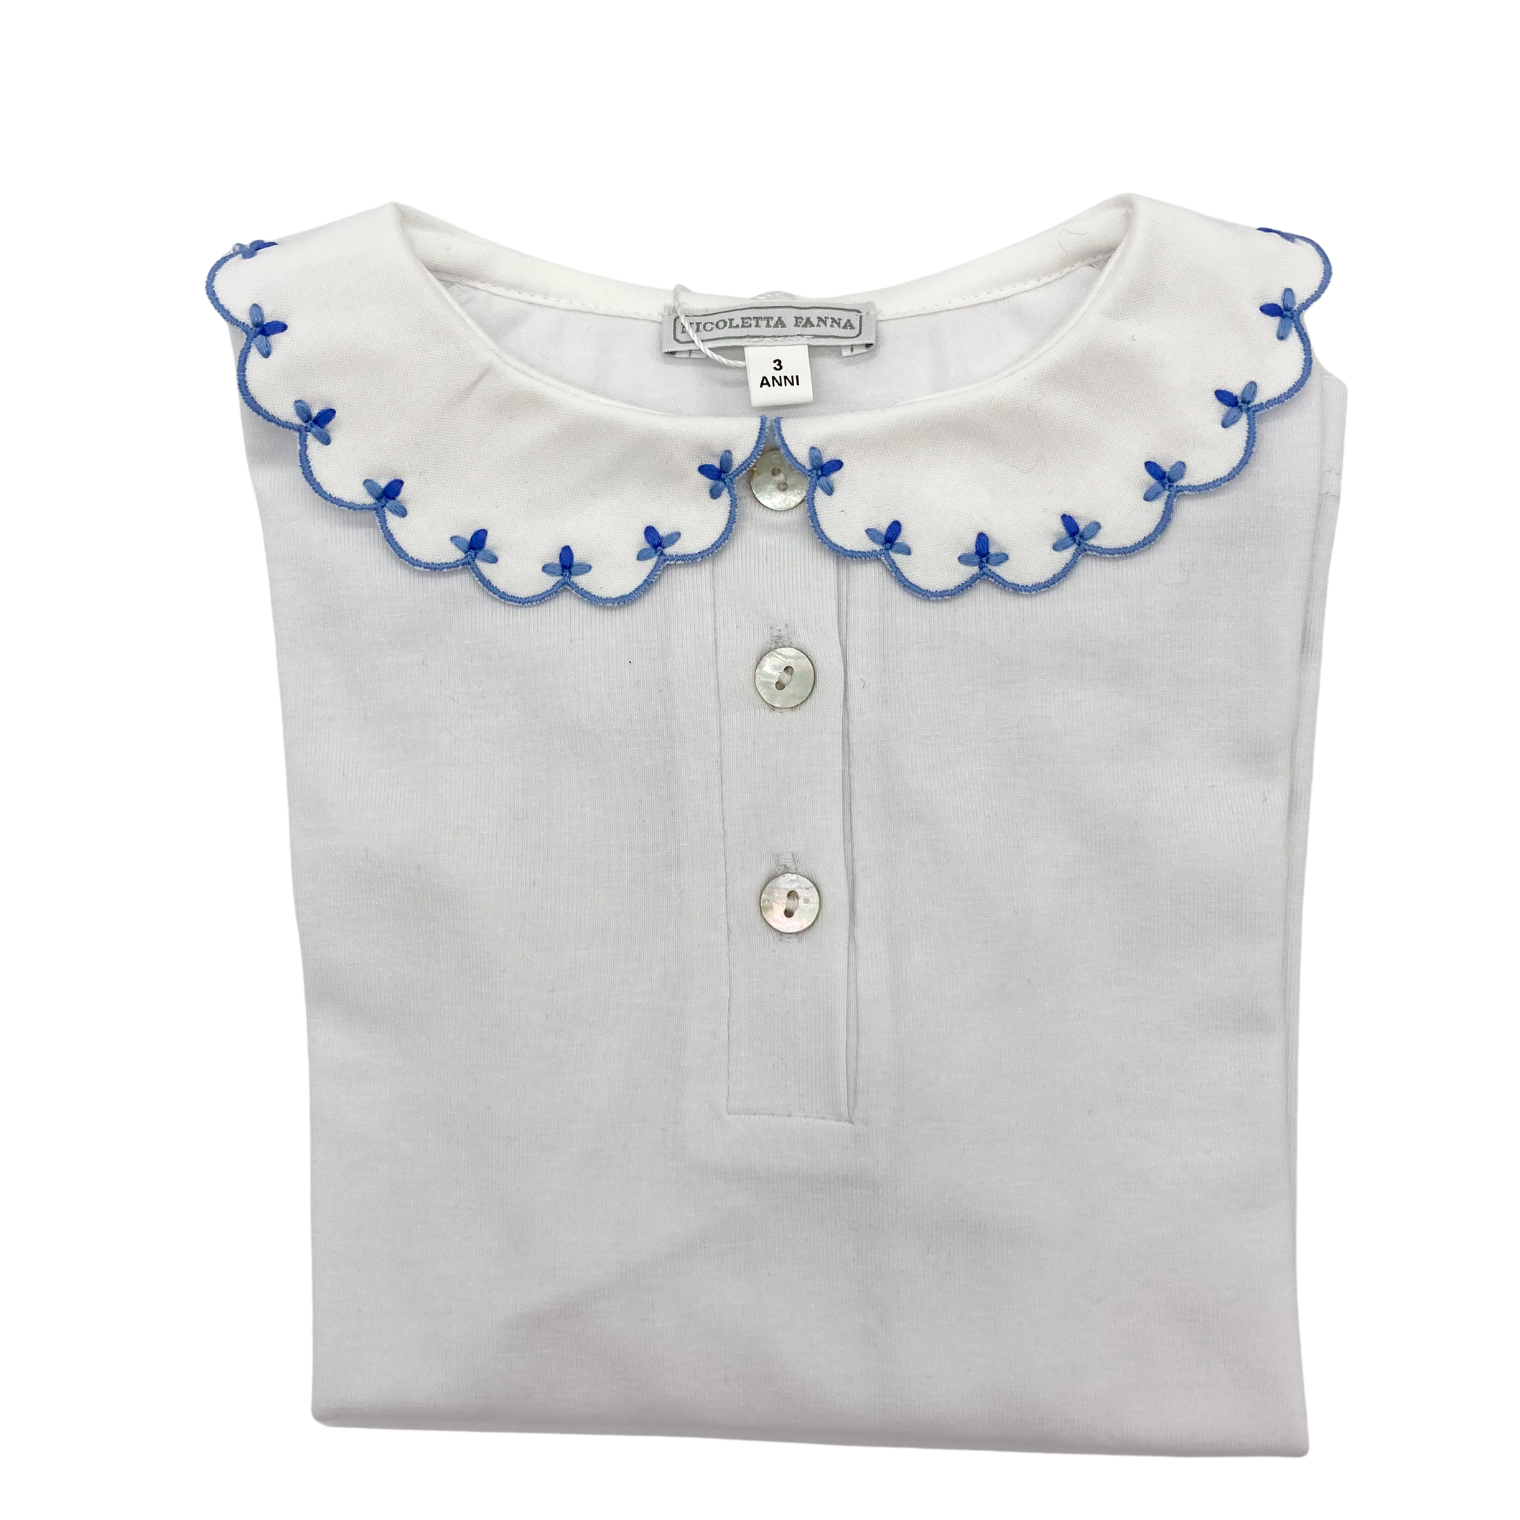 White Cotton Shirt with Embroidered Collar - Katie - Nicoletta Fanna